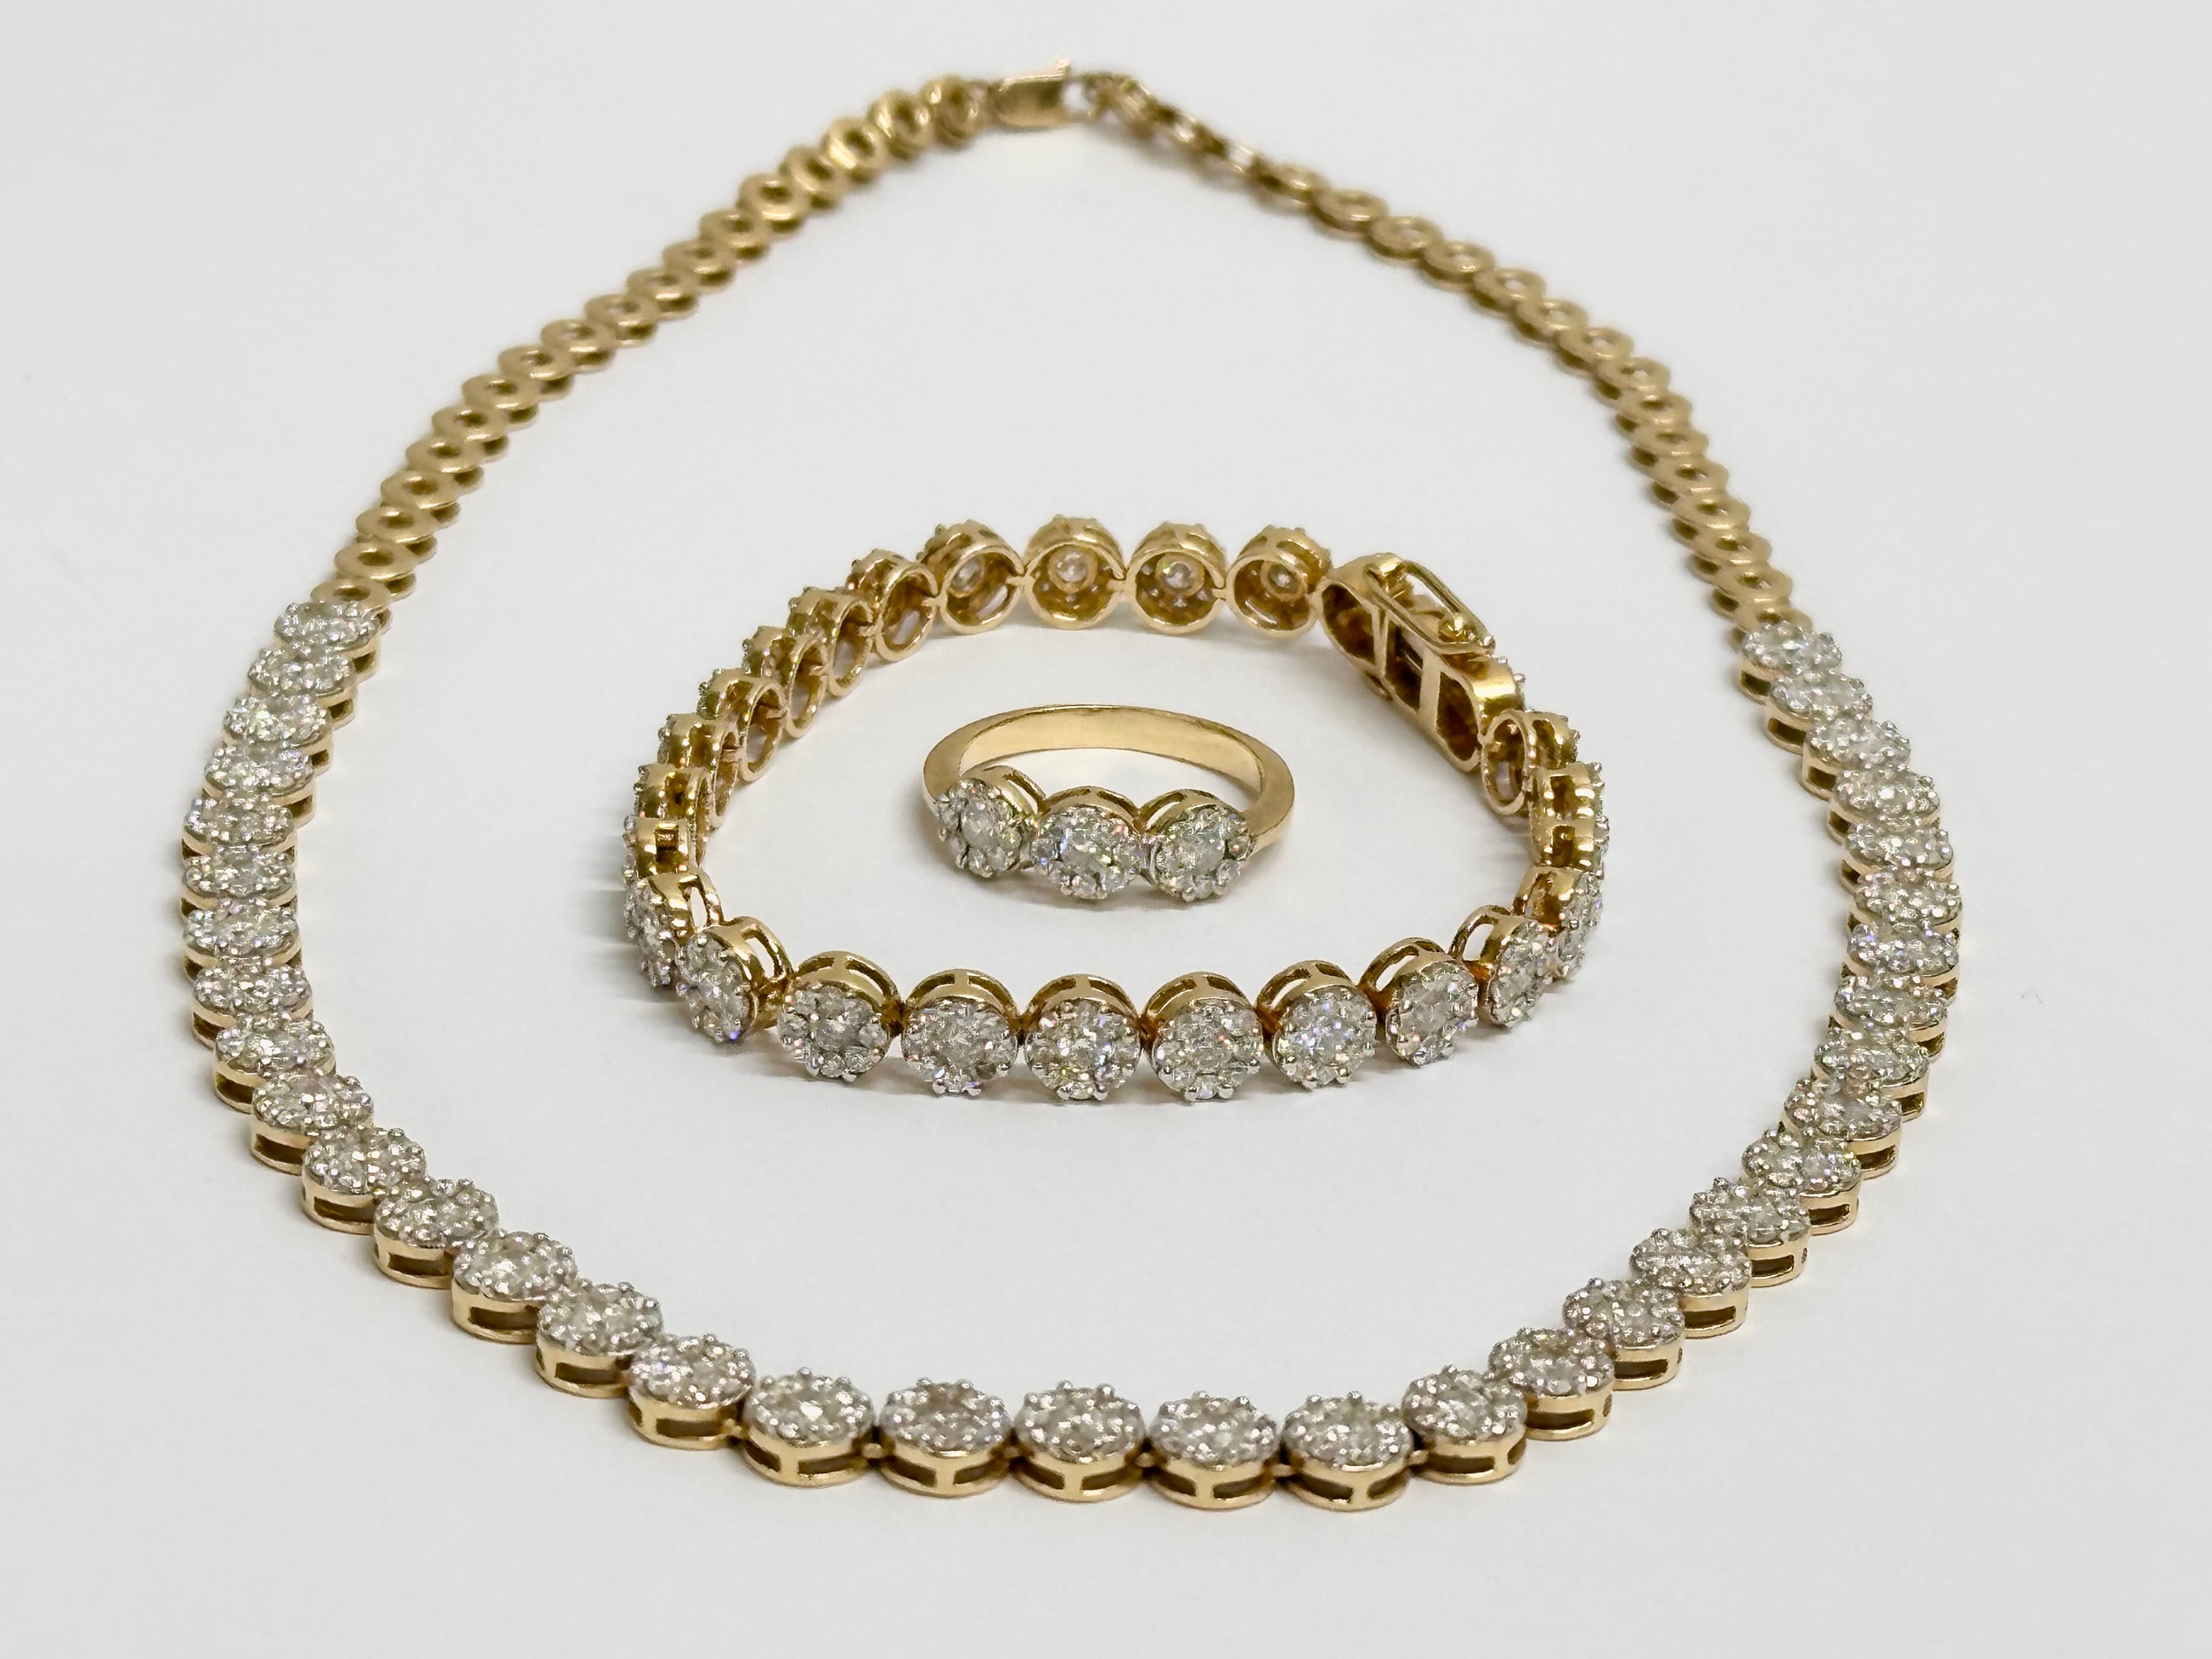 18ct gold and diamond set. 7ct Diamond necklace, 5ct diamond bracelet and matching ring. 48.3 grams